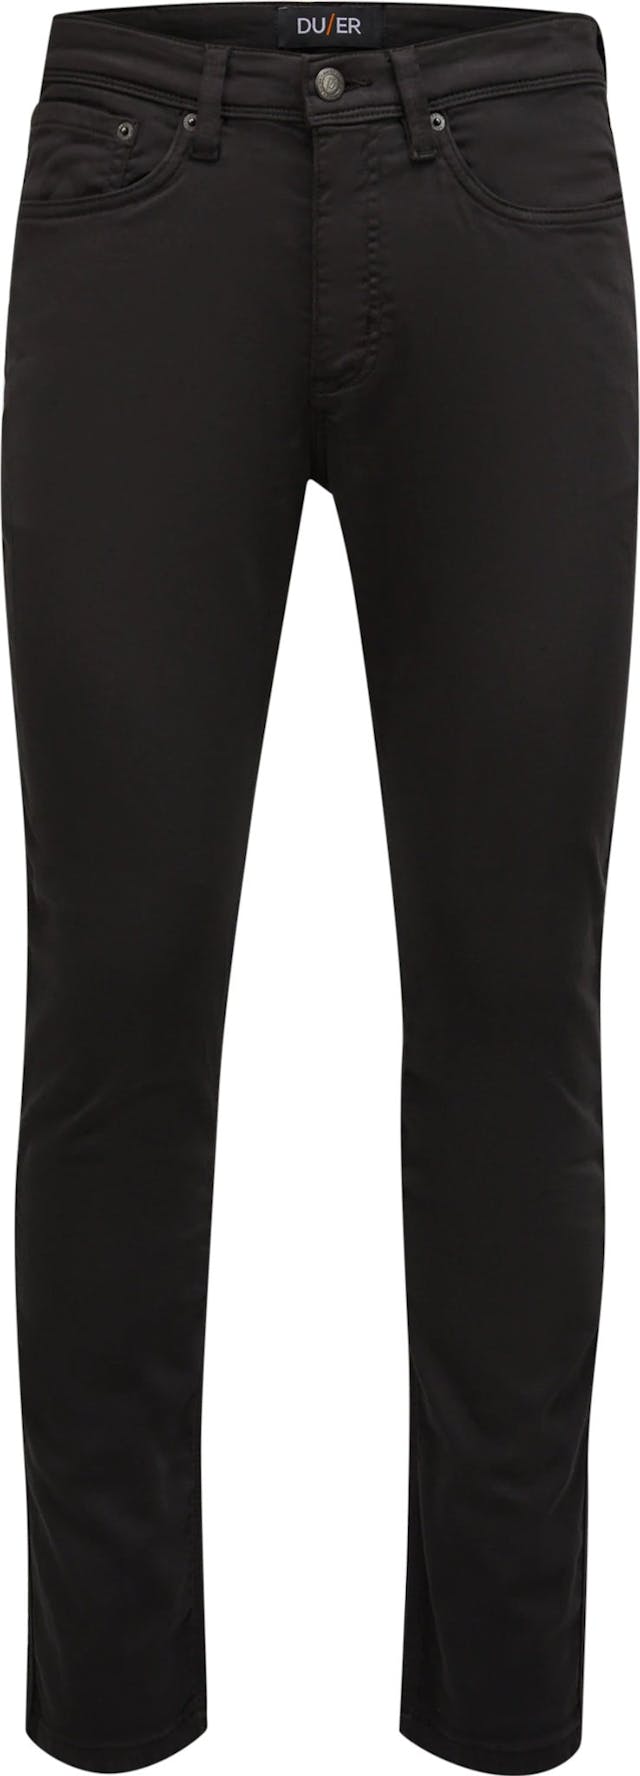 Product image for No Sweat Slim Pants - Inseam 30" - Men's